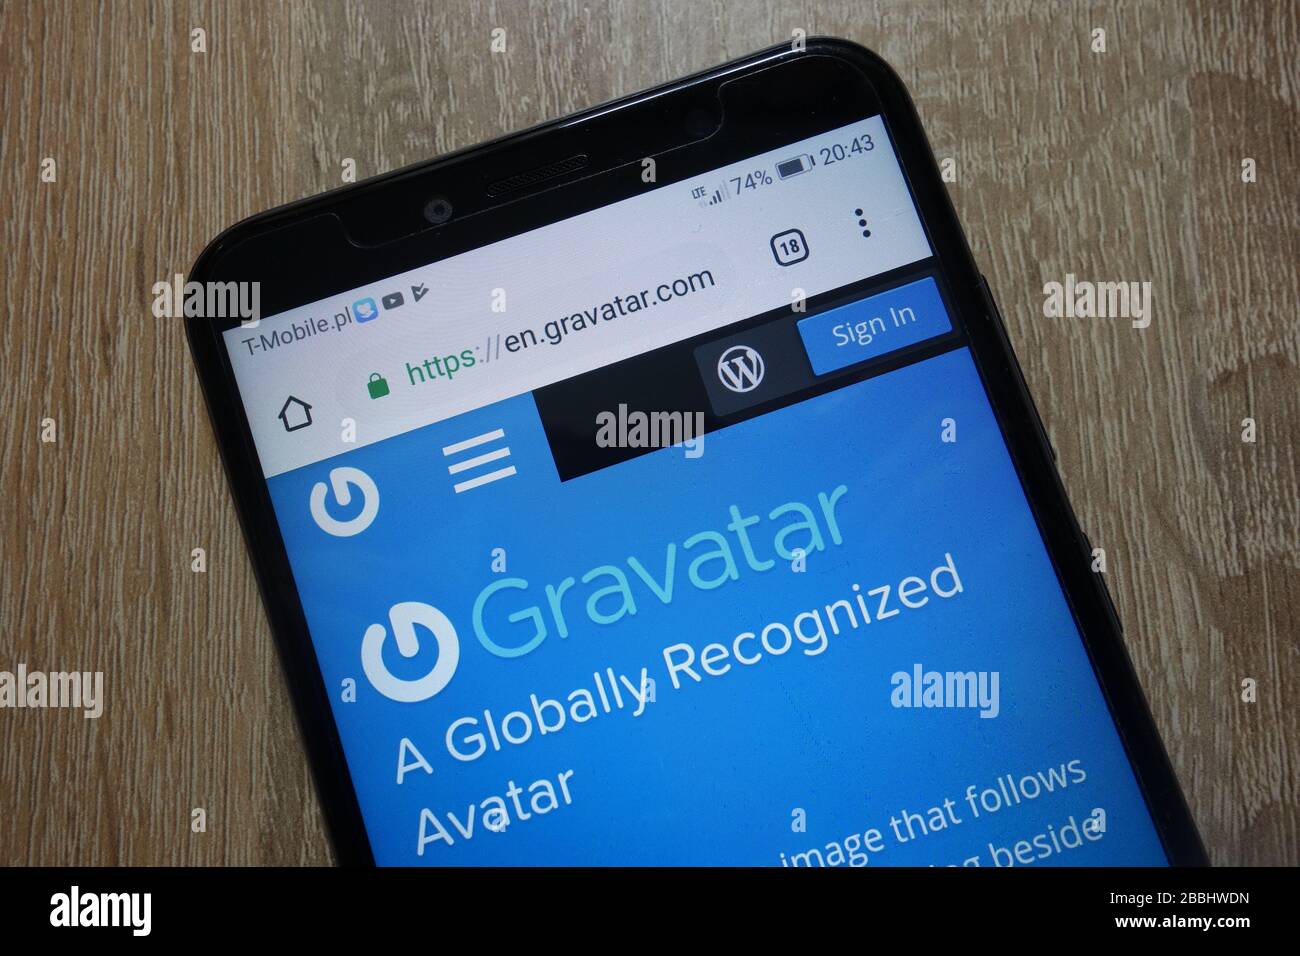 Gravatar website (en.gravatar.com) displayed on smartphone Stock Photo